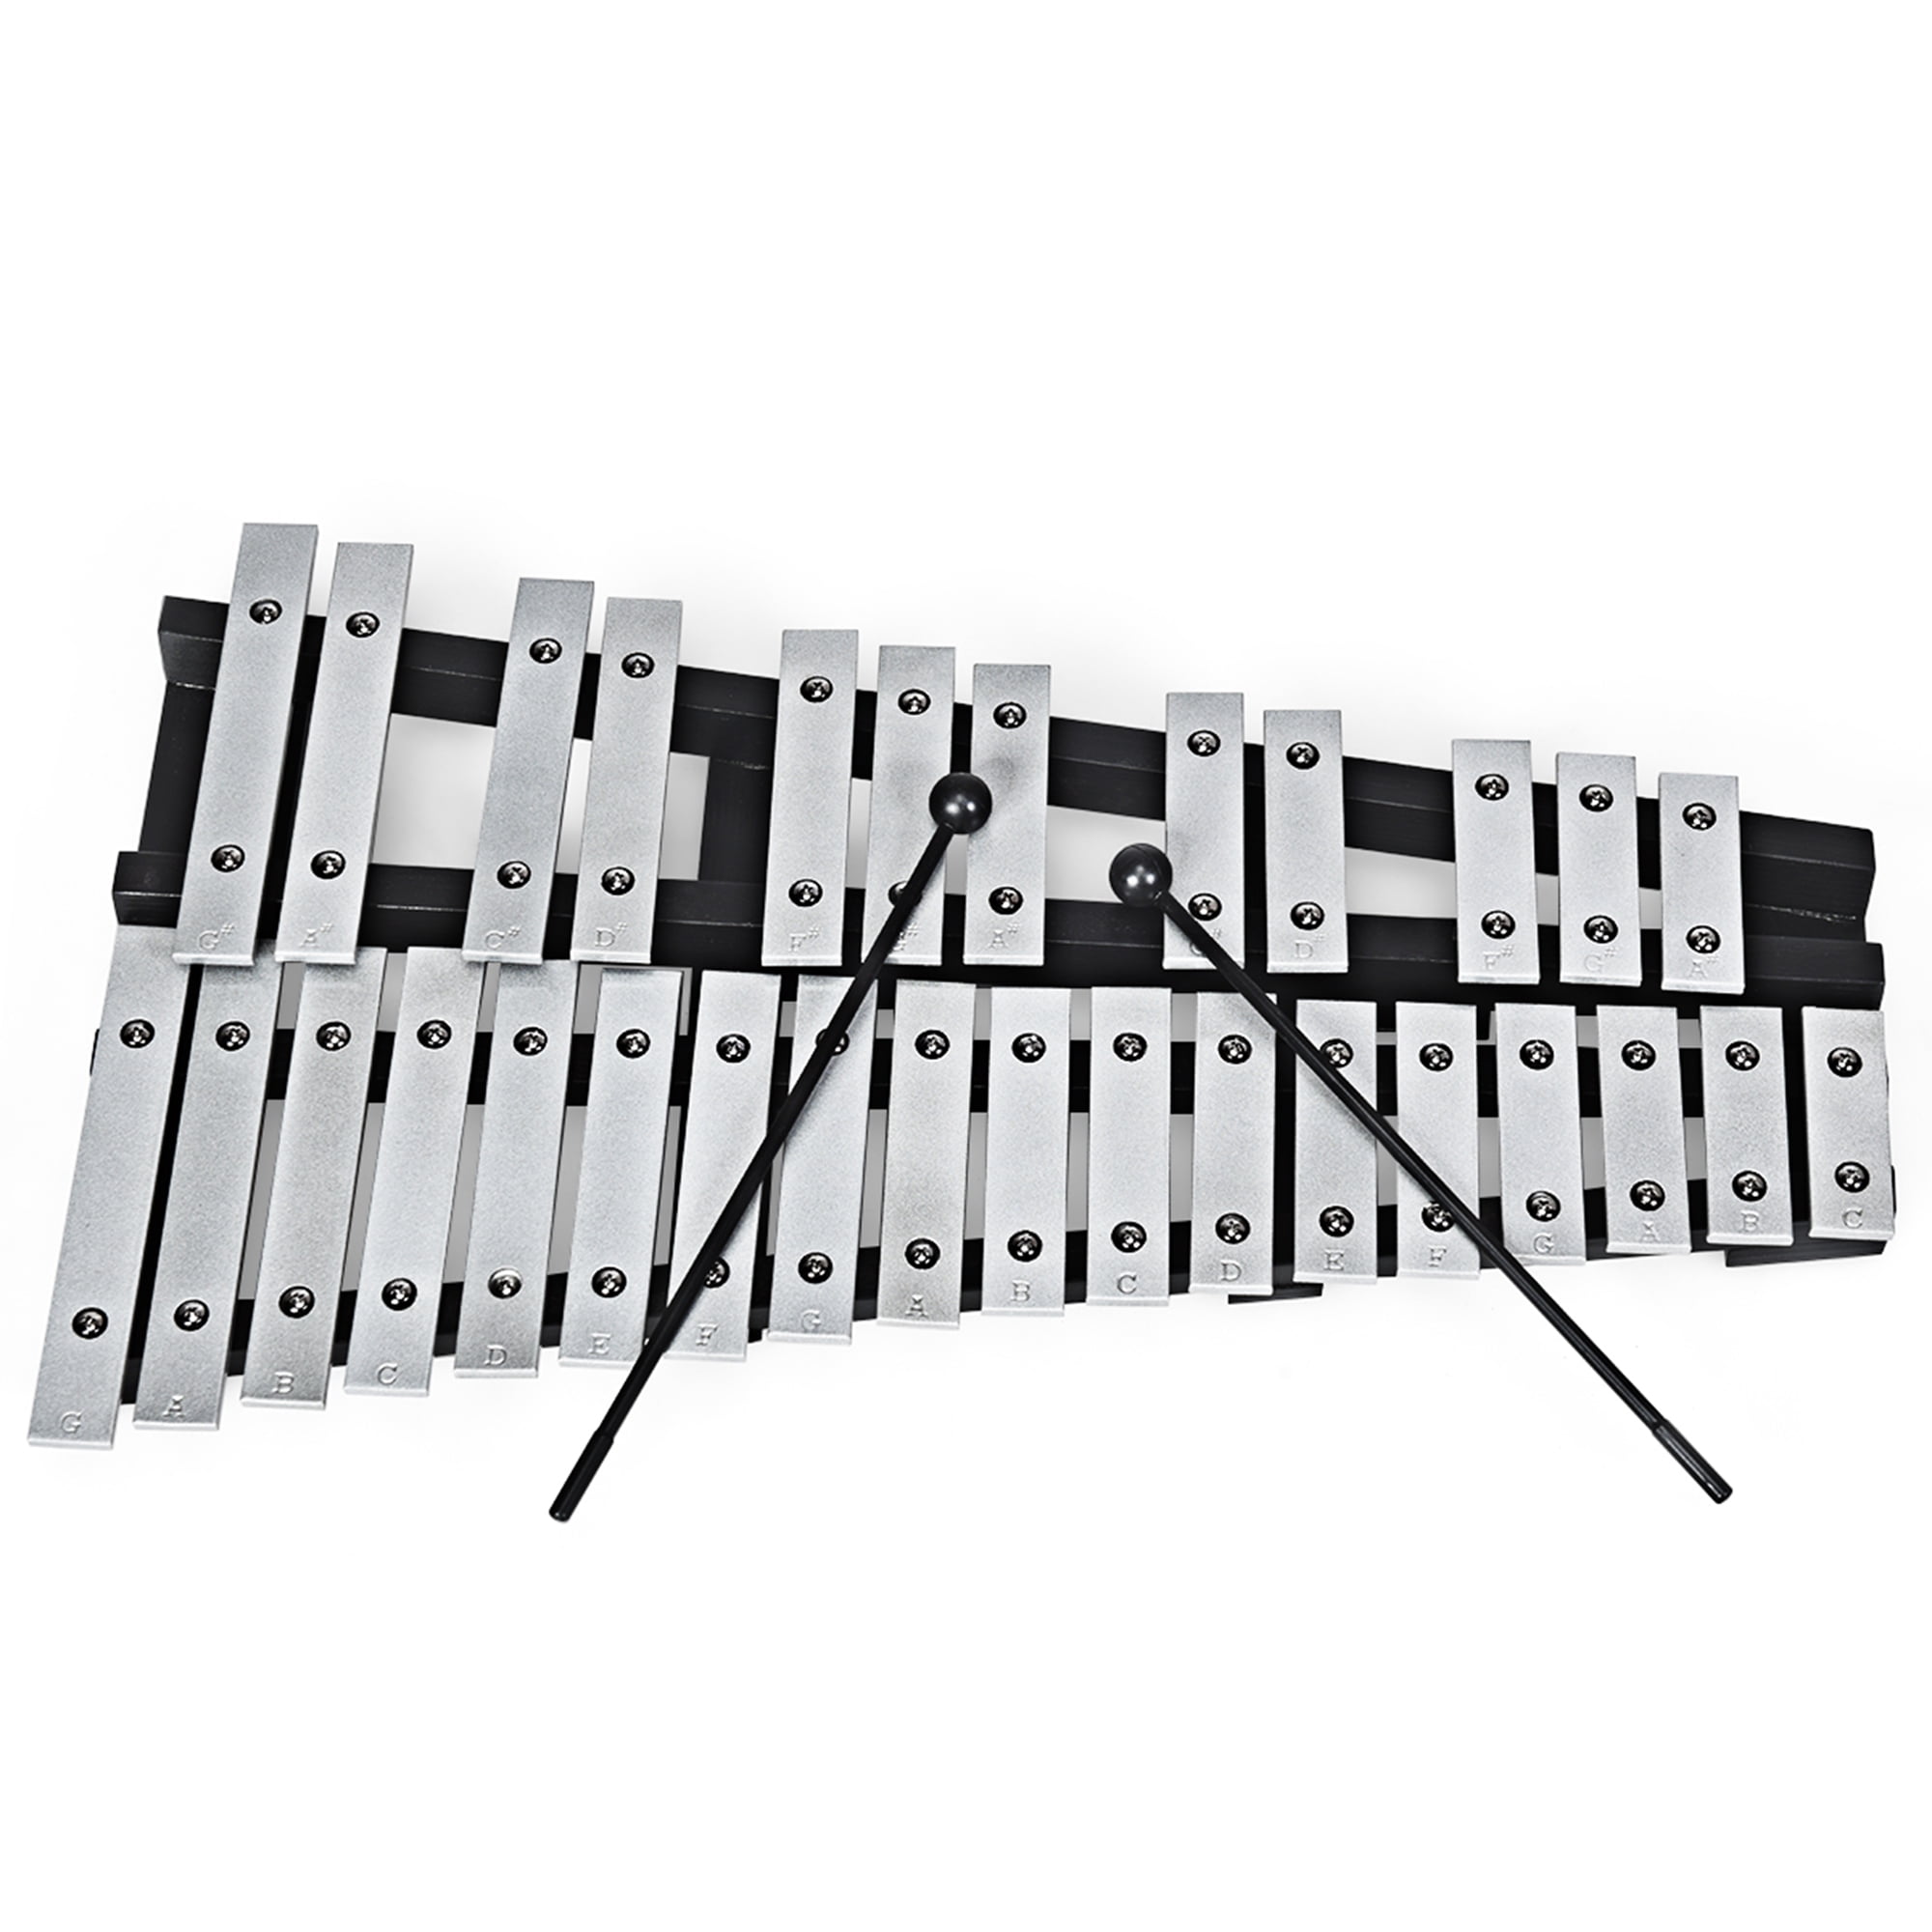 Topbuy 30 Note Foldable Glockenspiel Xylophone Instrument With 2 Rubber Mallets Walmart Com Walmart Com